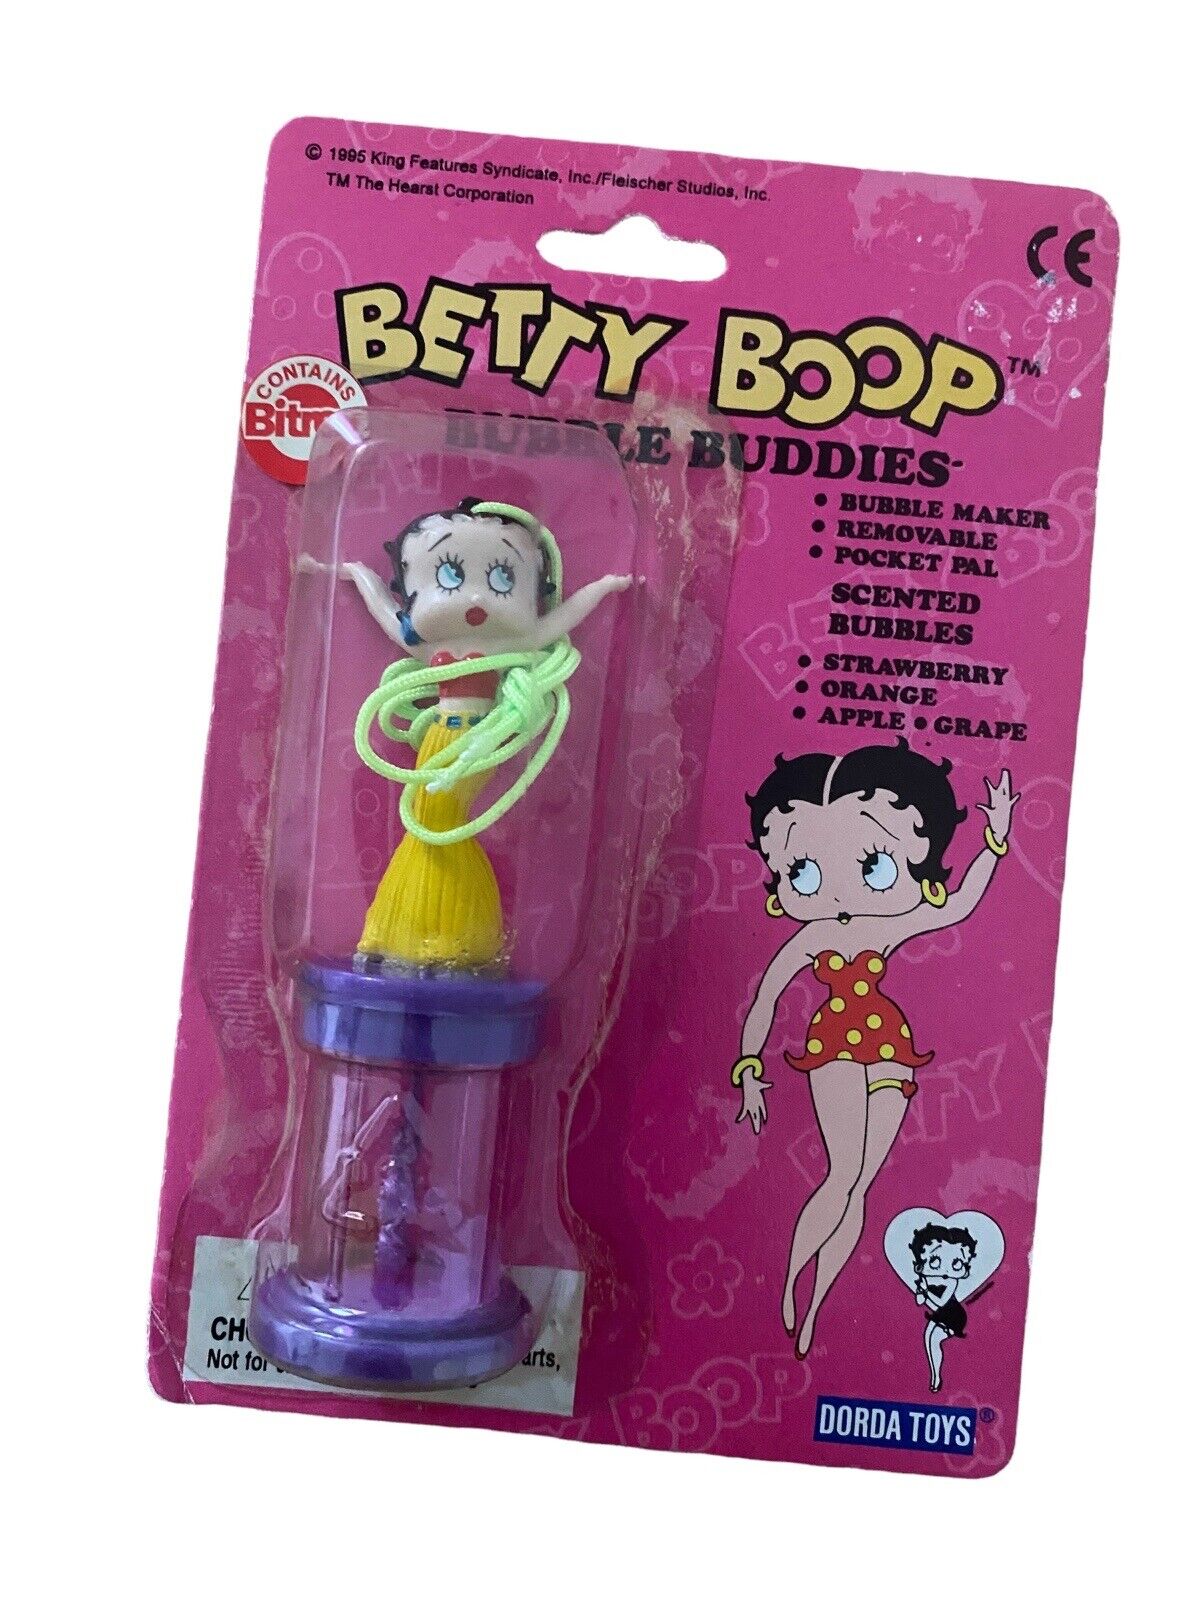 Vintage 1995 Dorda Toys Betty Boop Bubble Buddies Bubble Maker NOS